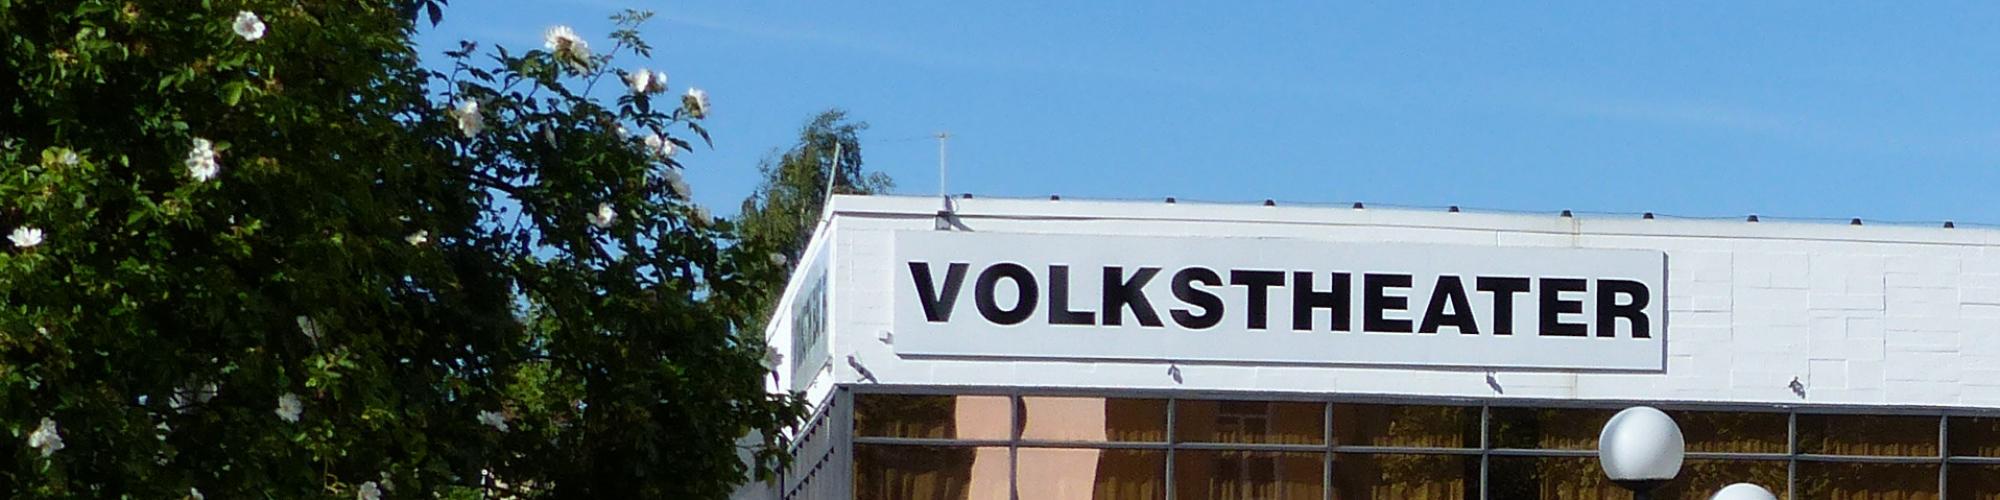 Volkstheater Rostock GmbH